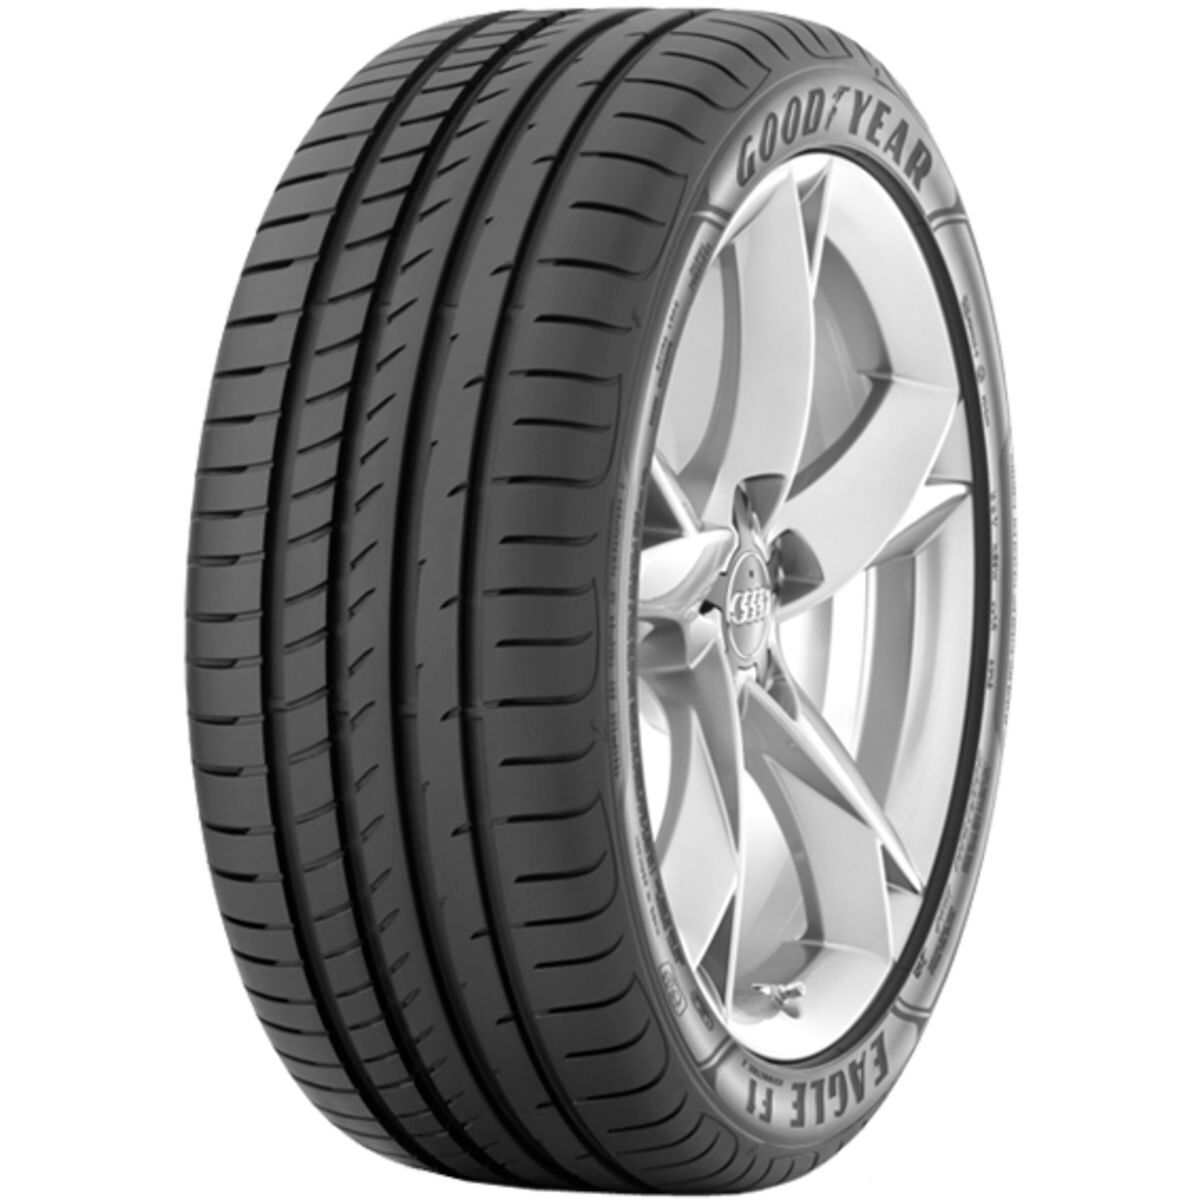 Neumáticos de verano GOODYEAR Eagle F1 Asymmetric 2 265/35R20 95Y